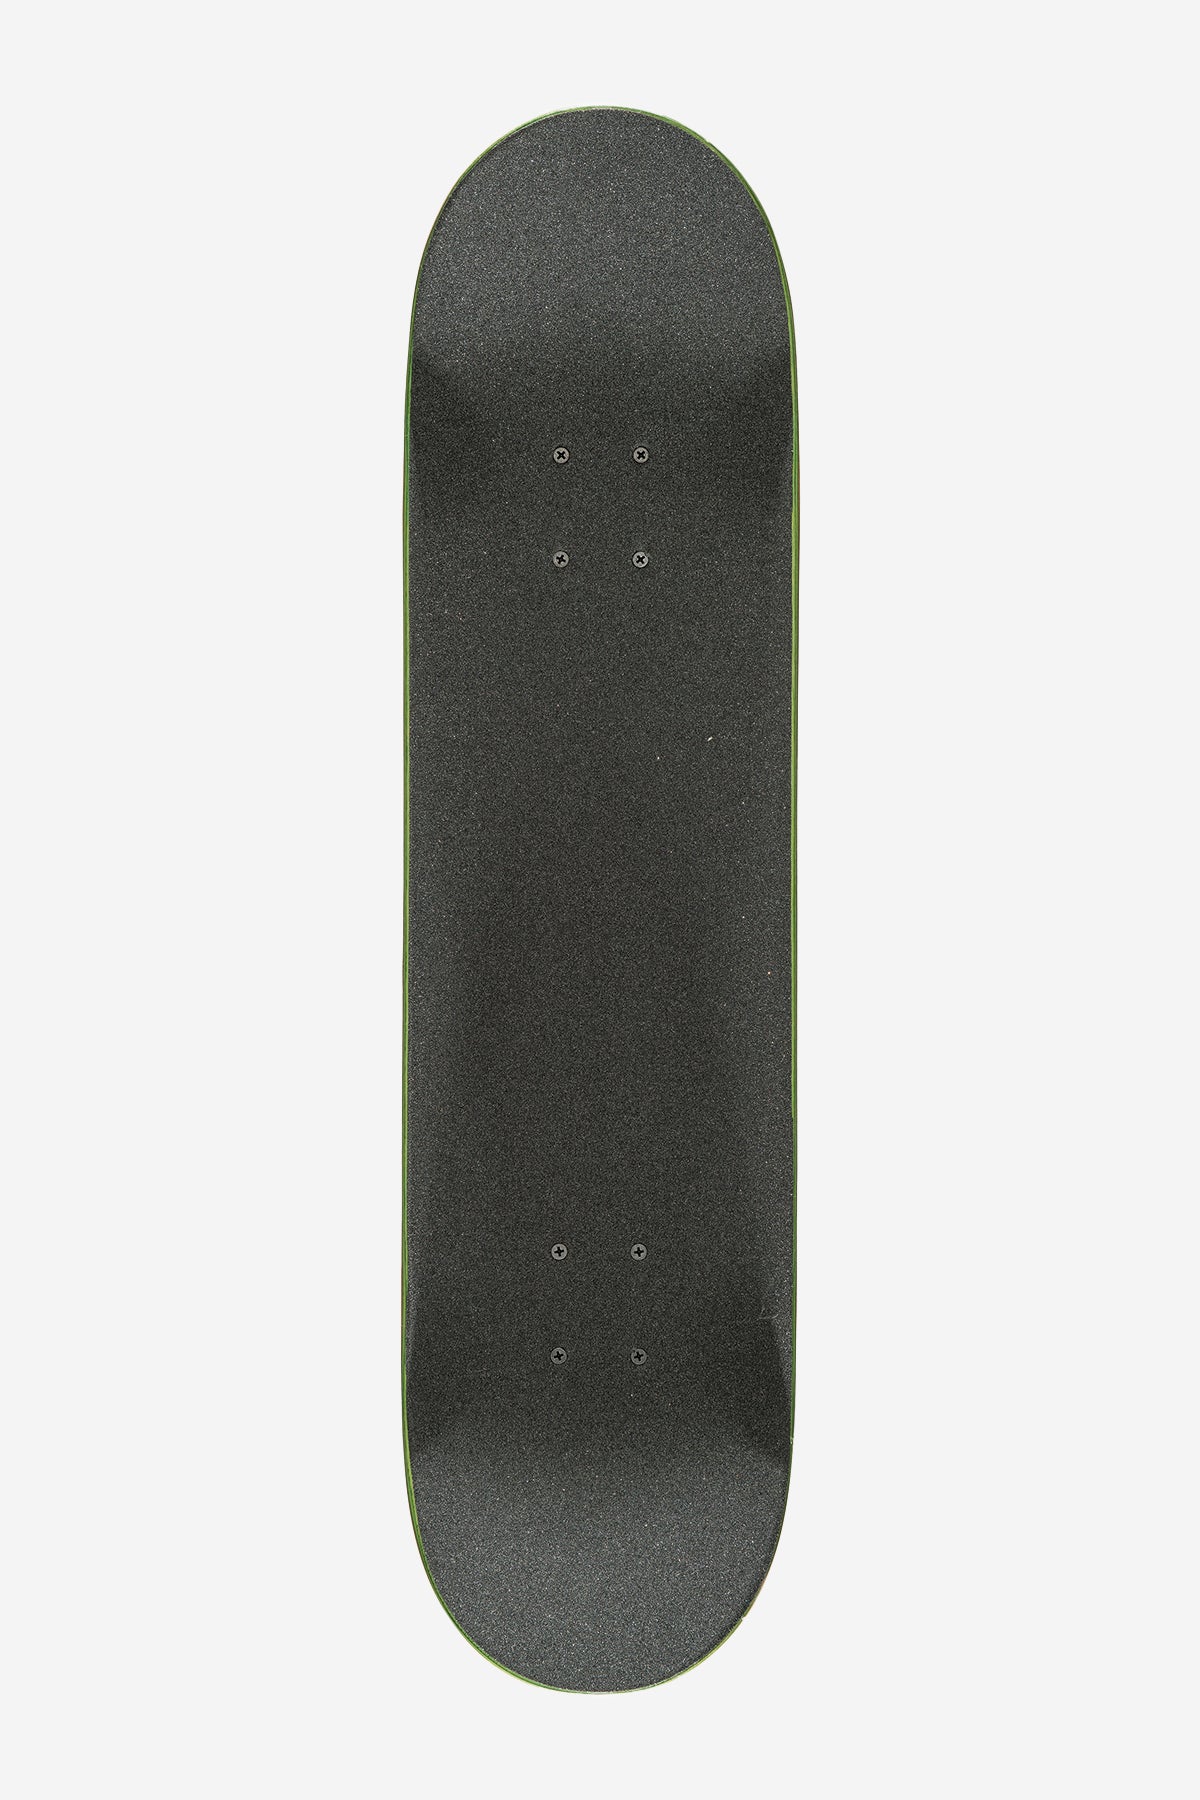 Globe - G1 Palm Off - Schwarz - 8.0" Komplett Skateboard